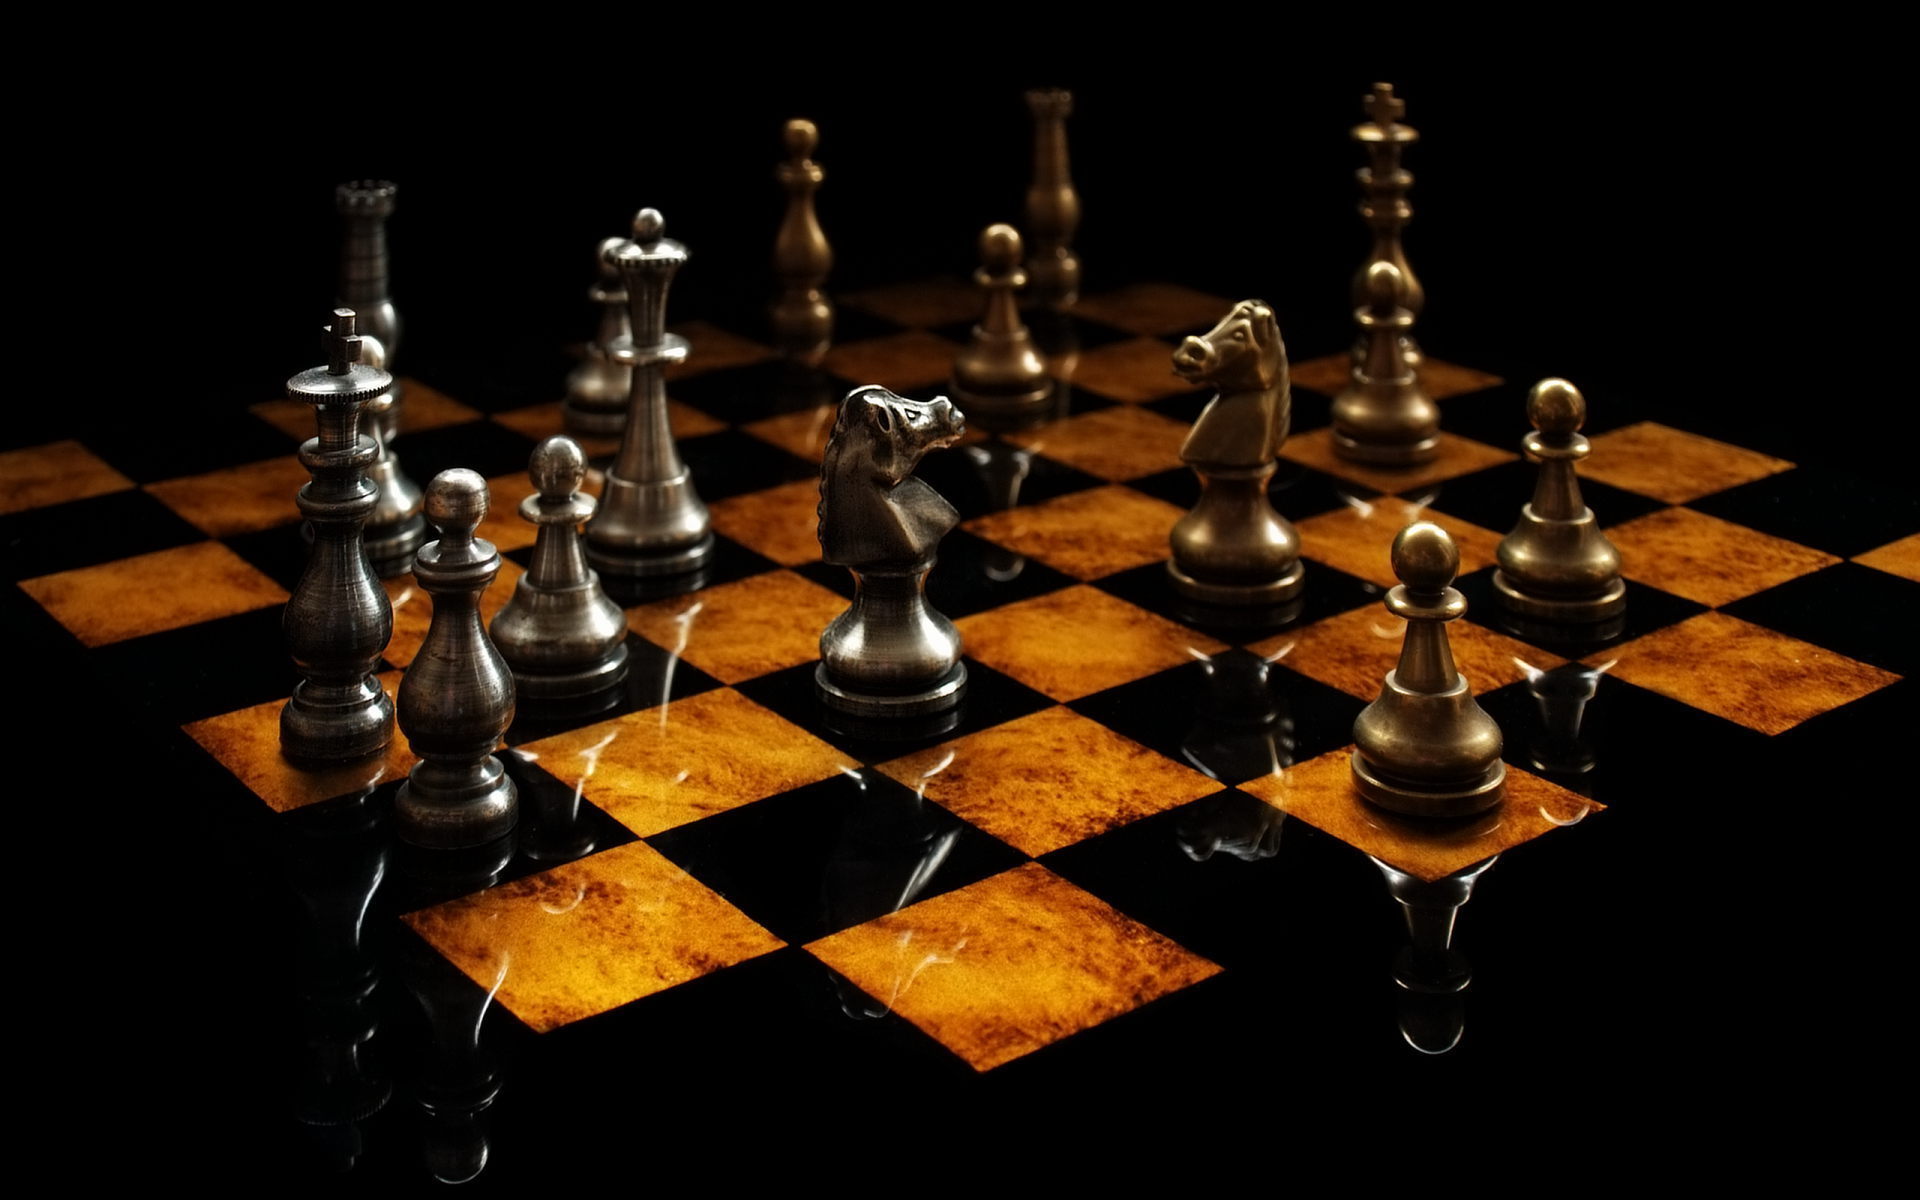 Playing chess wallpaper, 2560x1600, 6919